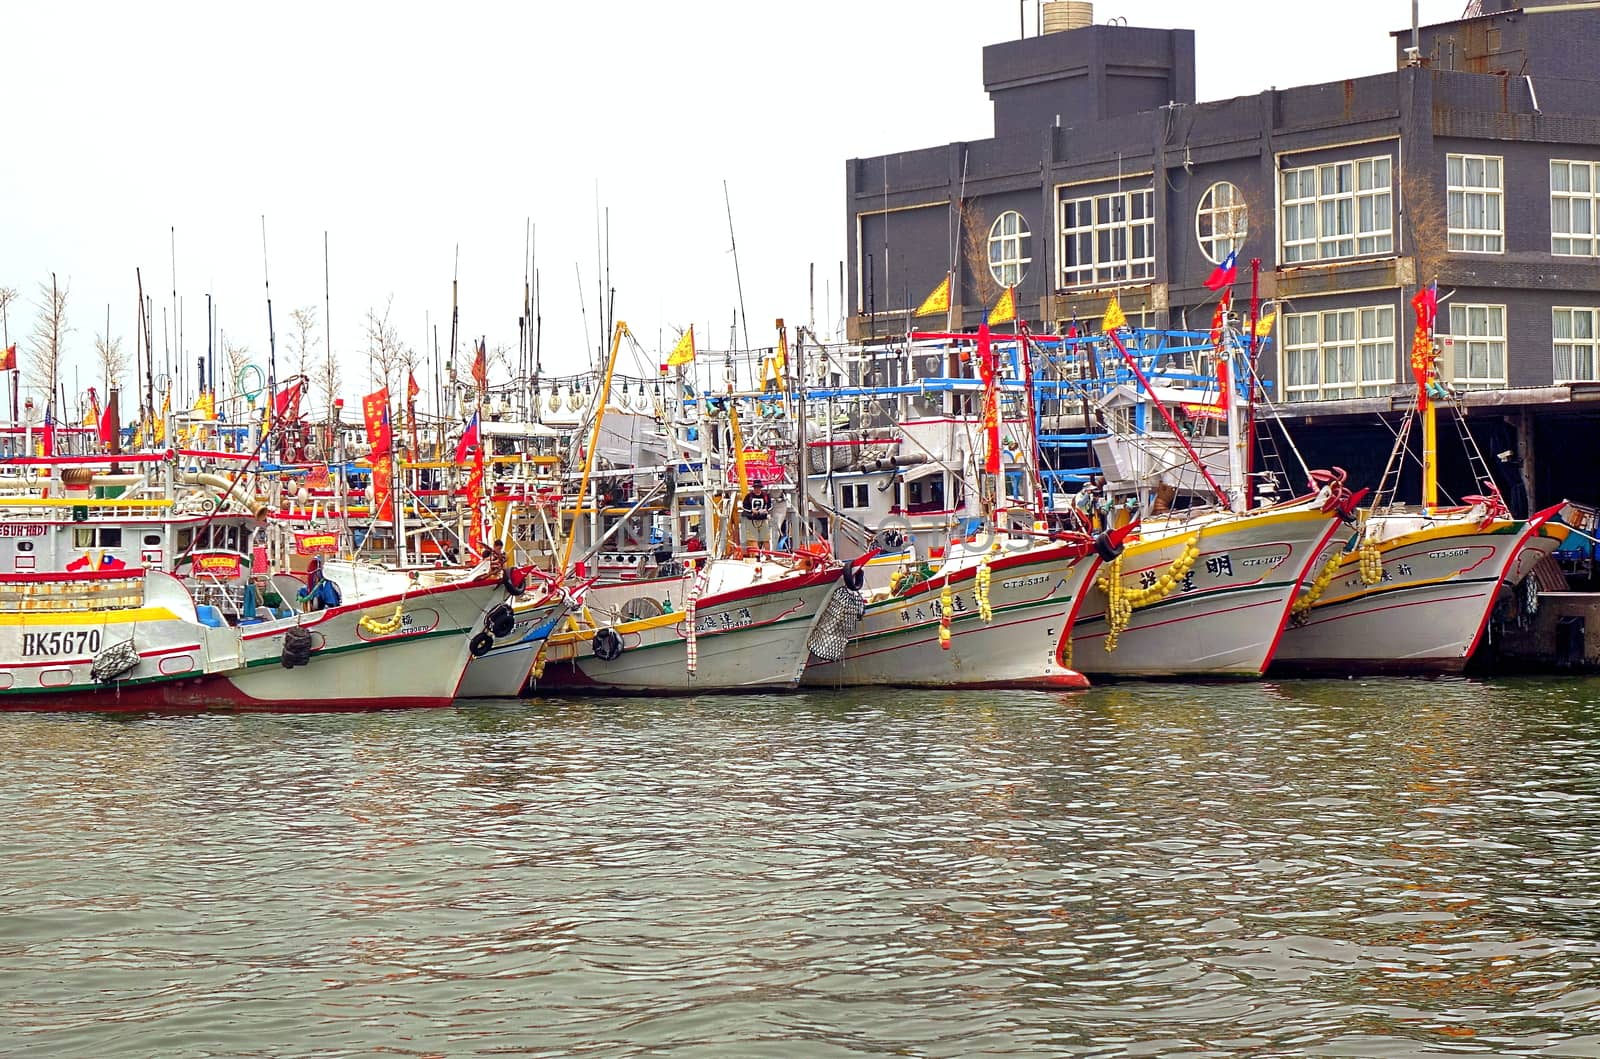 A Fleet of Fishing Boats in Southern Taiwan by shiyali